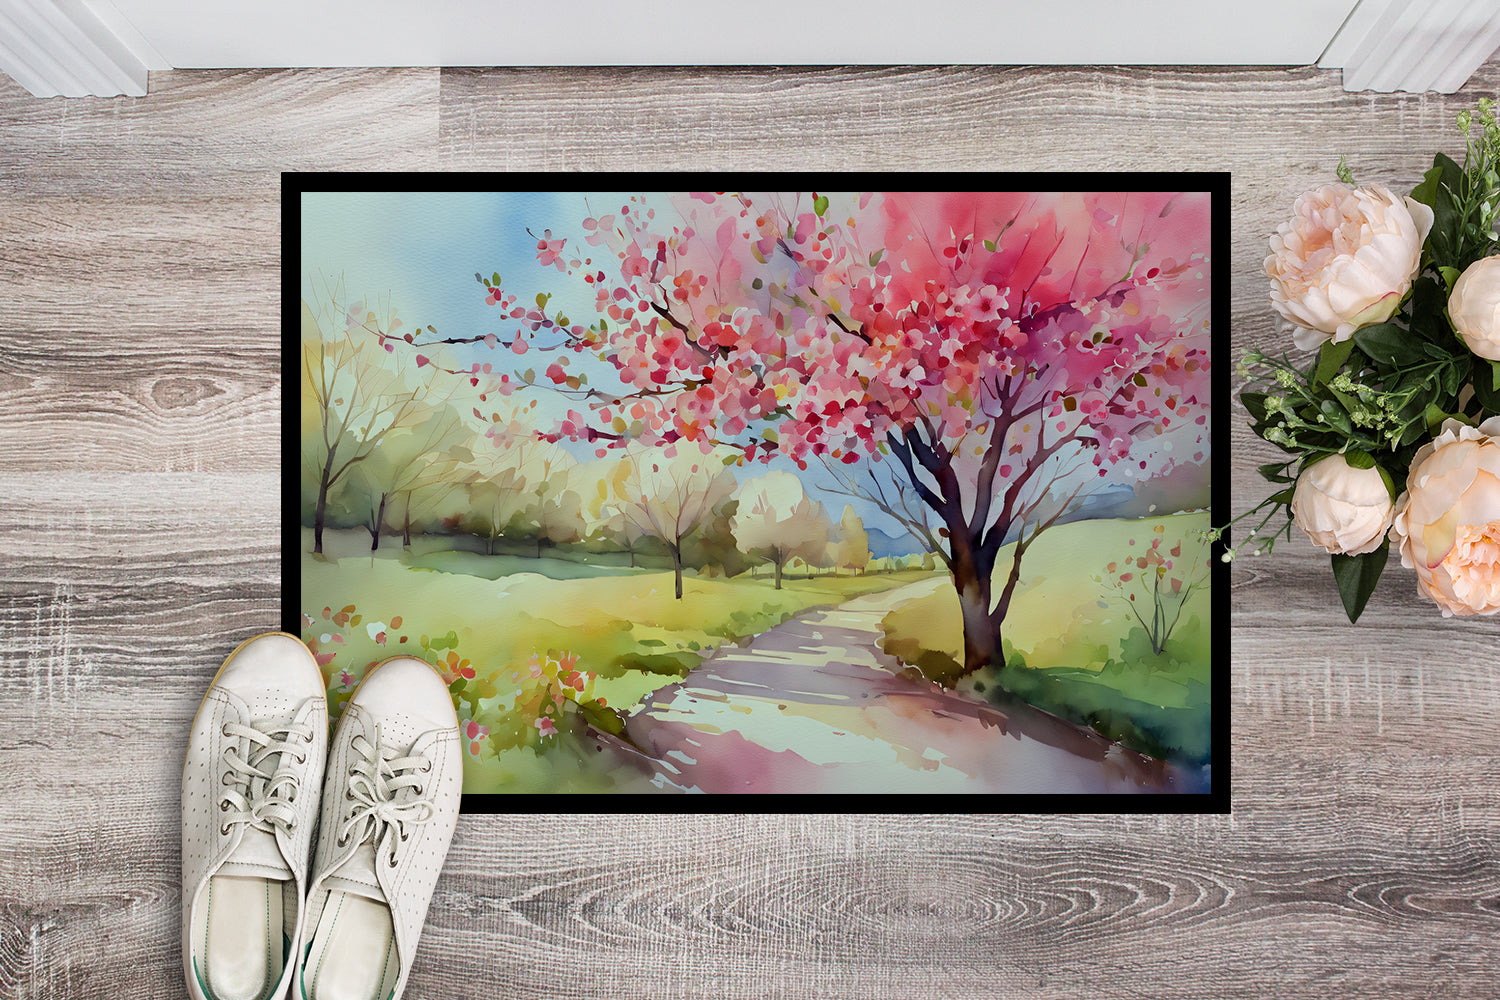 Buy this Michigan Apple Blossoms in Watercolor Doormat 18x27